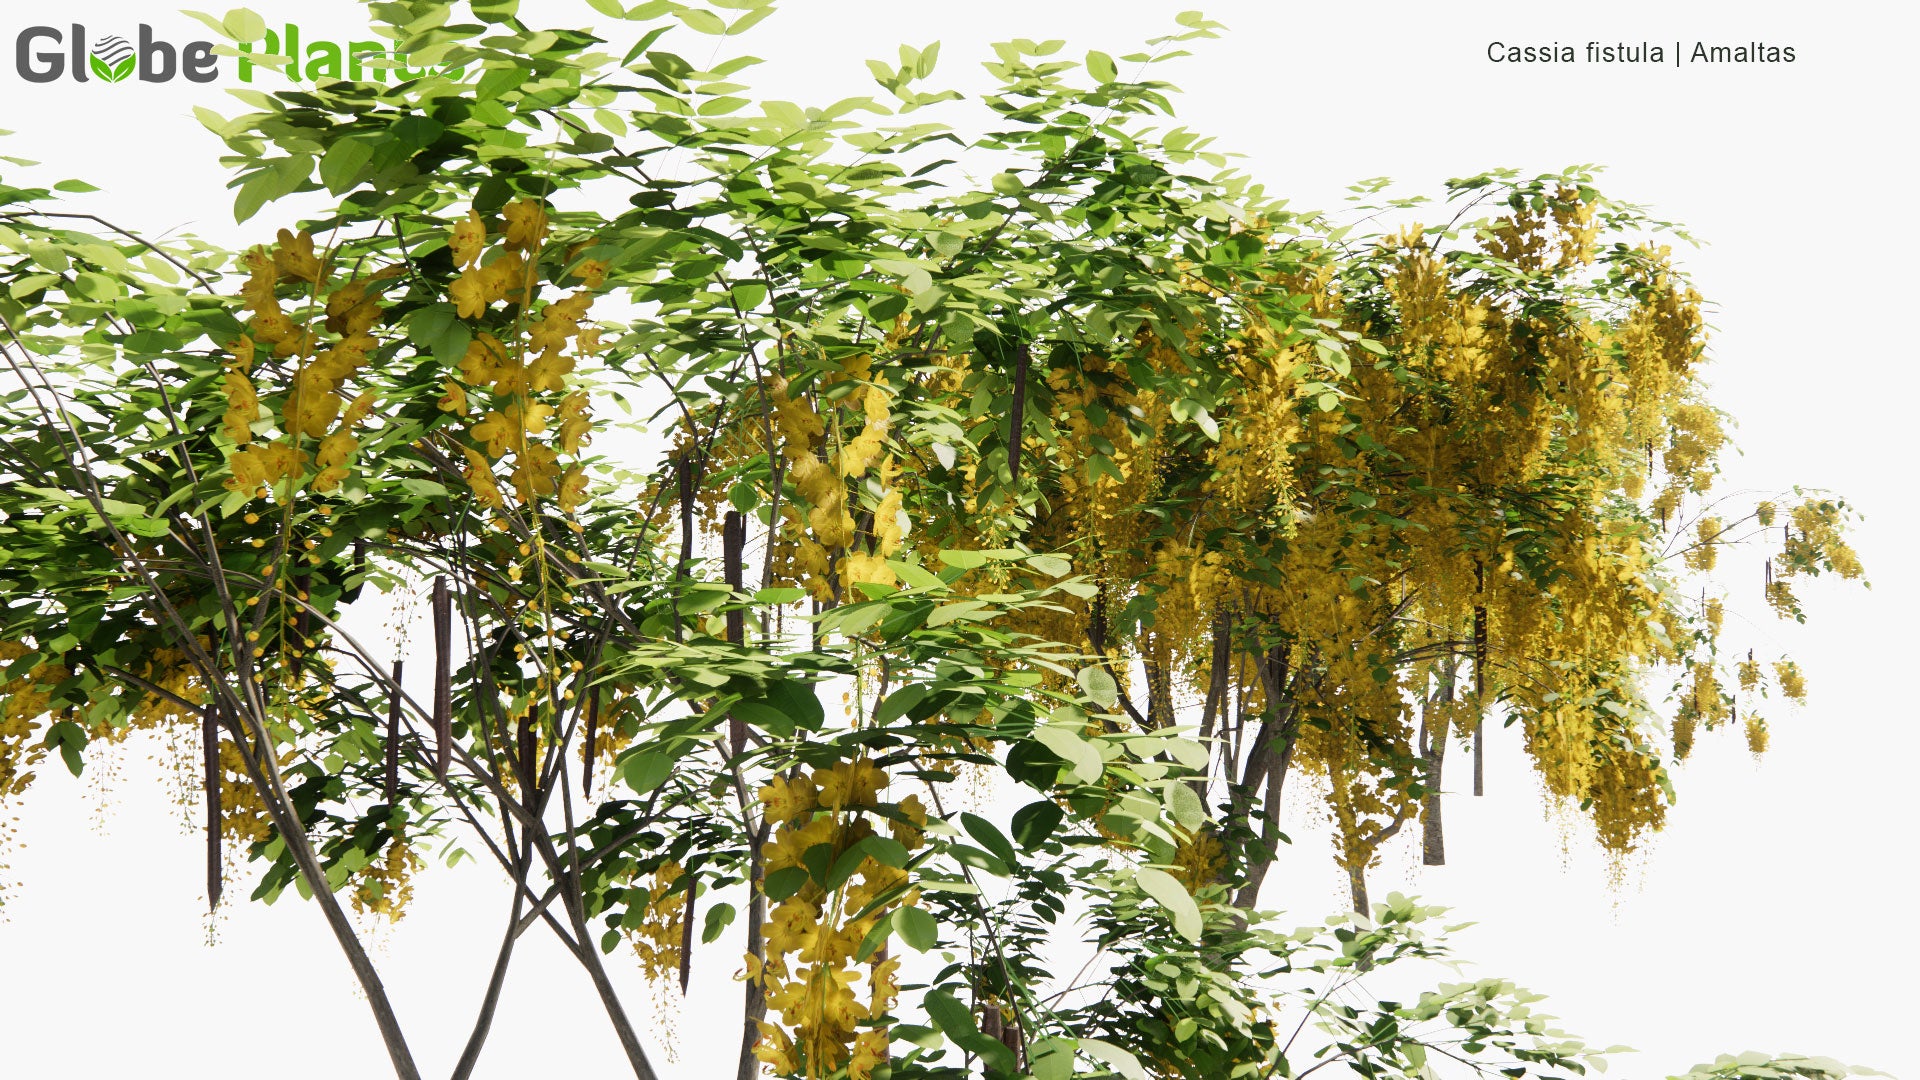 Low Poly Cassia Fistula - Amaltas, Golden Shower, Purging Cassia, Indian Laburnum, Pudding-Pipe Tree (3D Model)